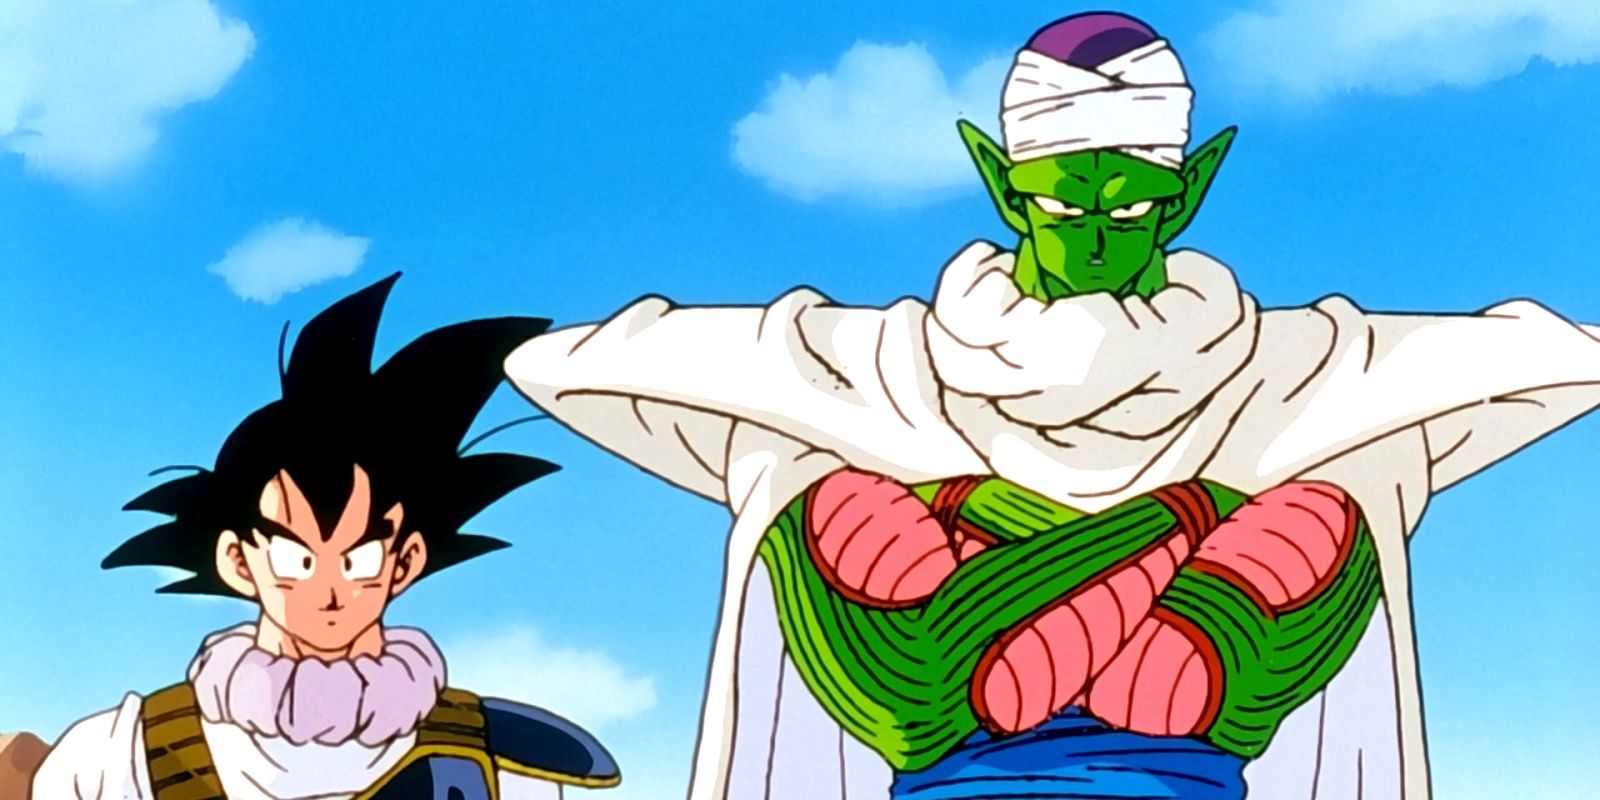 Goku and Piccolo in Dragon Ball Z